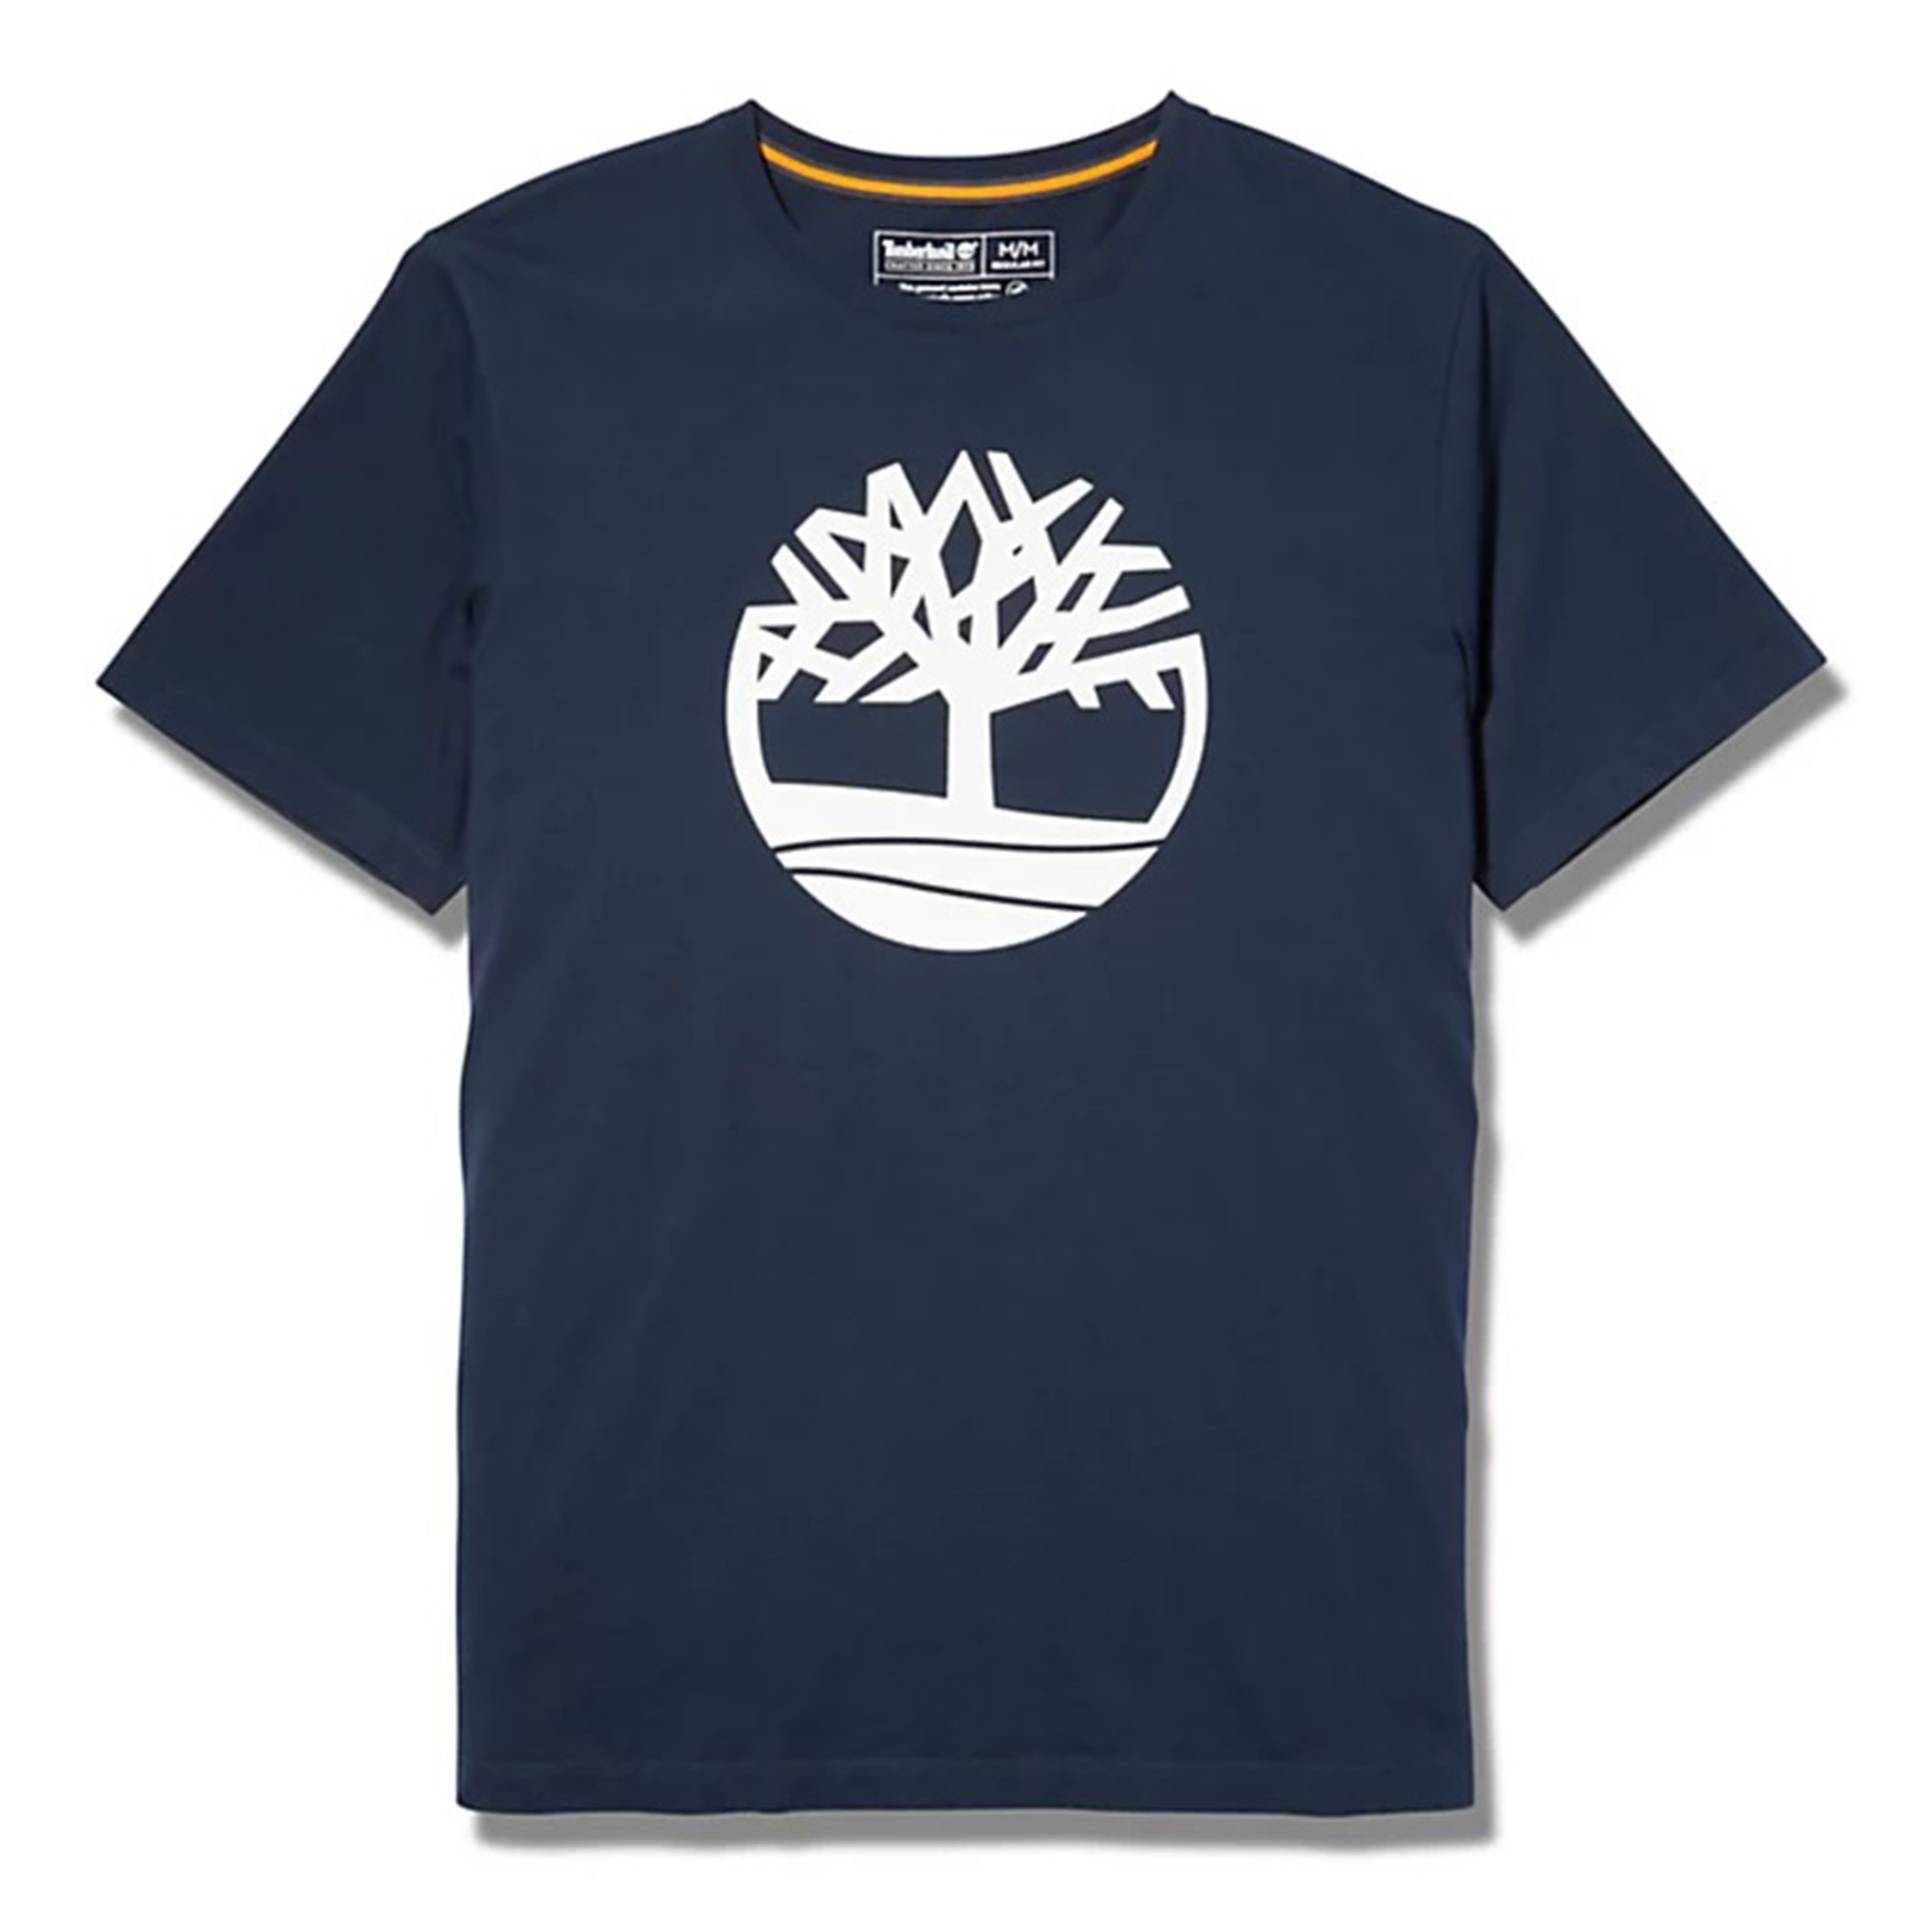 Timberland SS TREE LOGO T Herren T-Shirt Shirt TB0A2C6S blau von Timberland